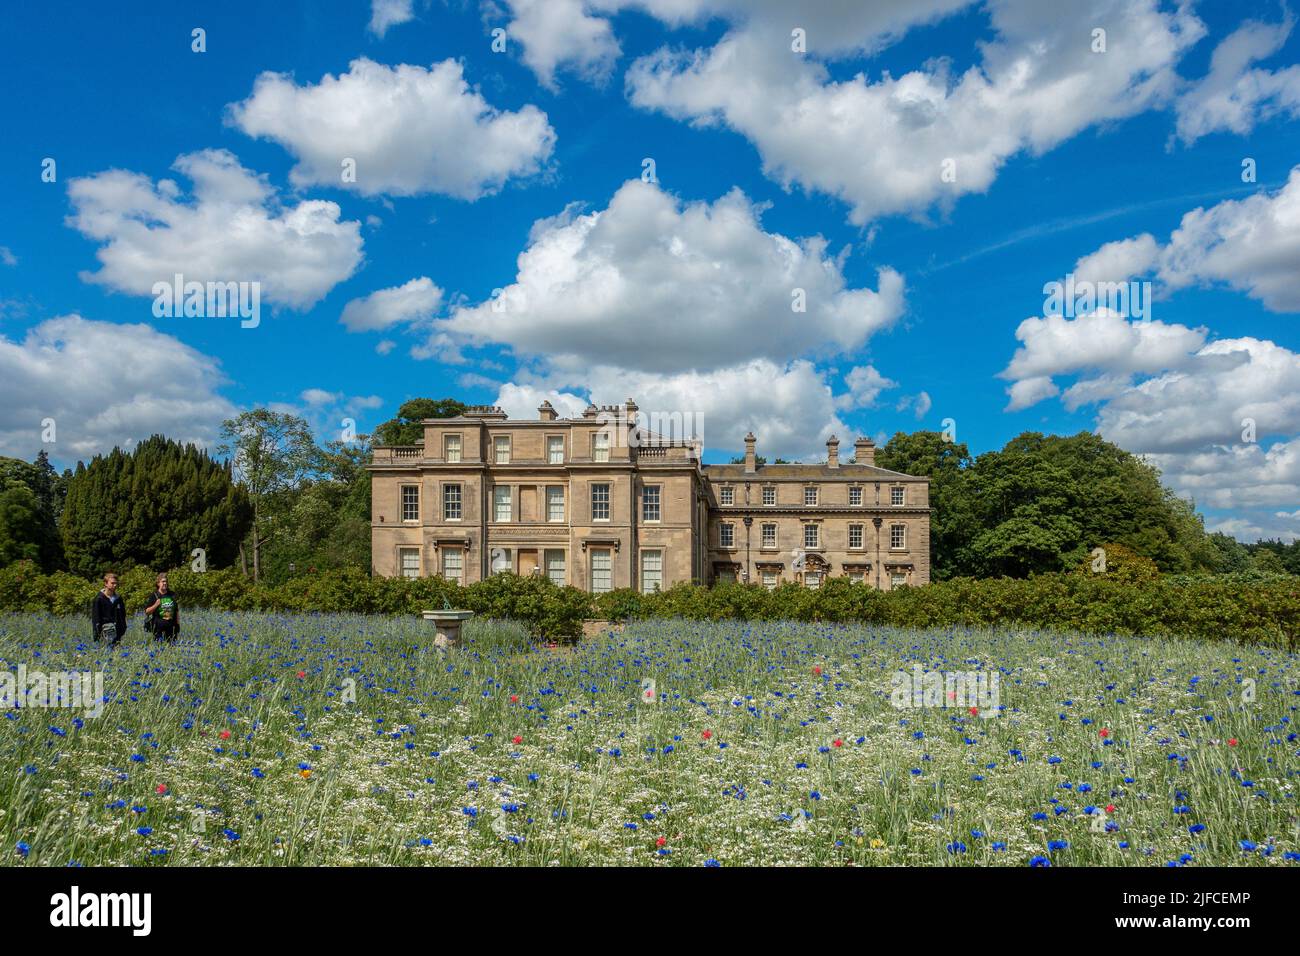 Normanby Hall, Normanby, North Lincolnshire, Inglaterra Campo de cornflowers azules que rodea un dial de sol. Foto de stock